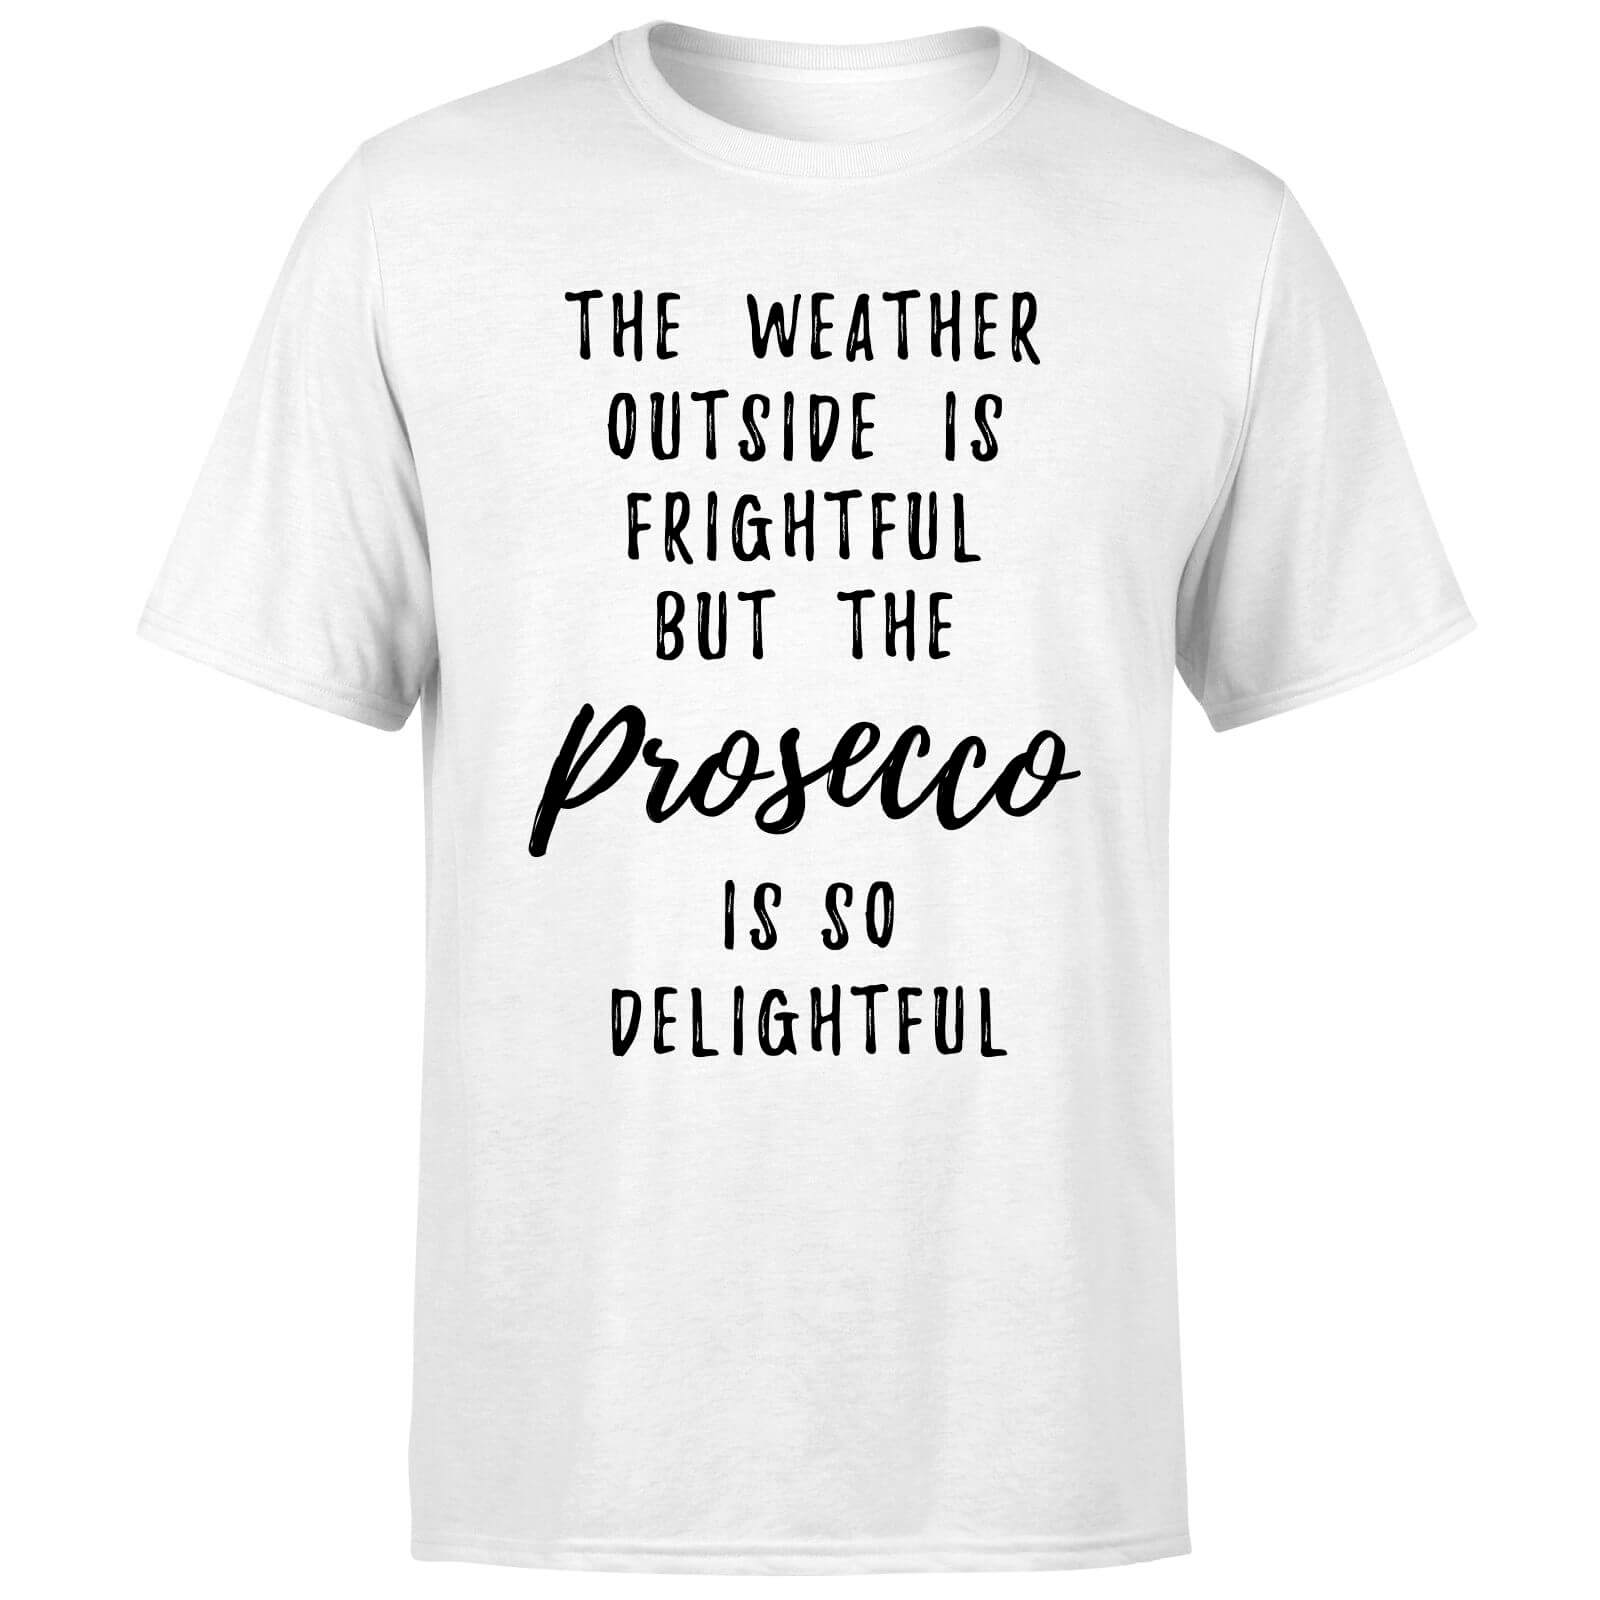 Prosecco Is So Delightful T-Shirt - White - S - White